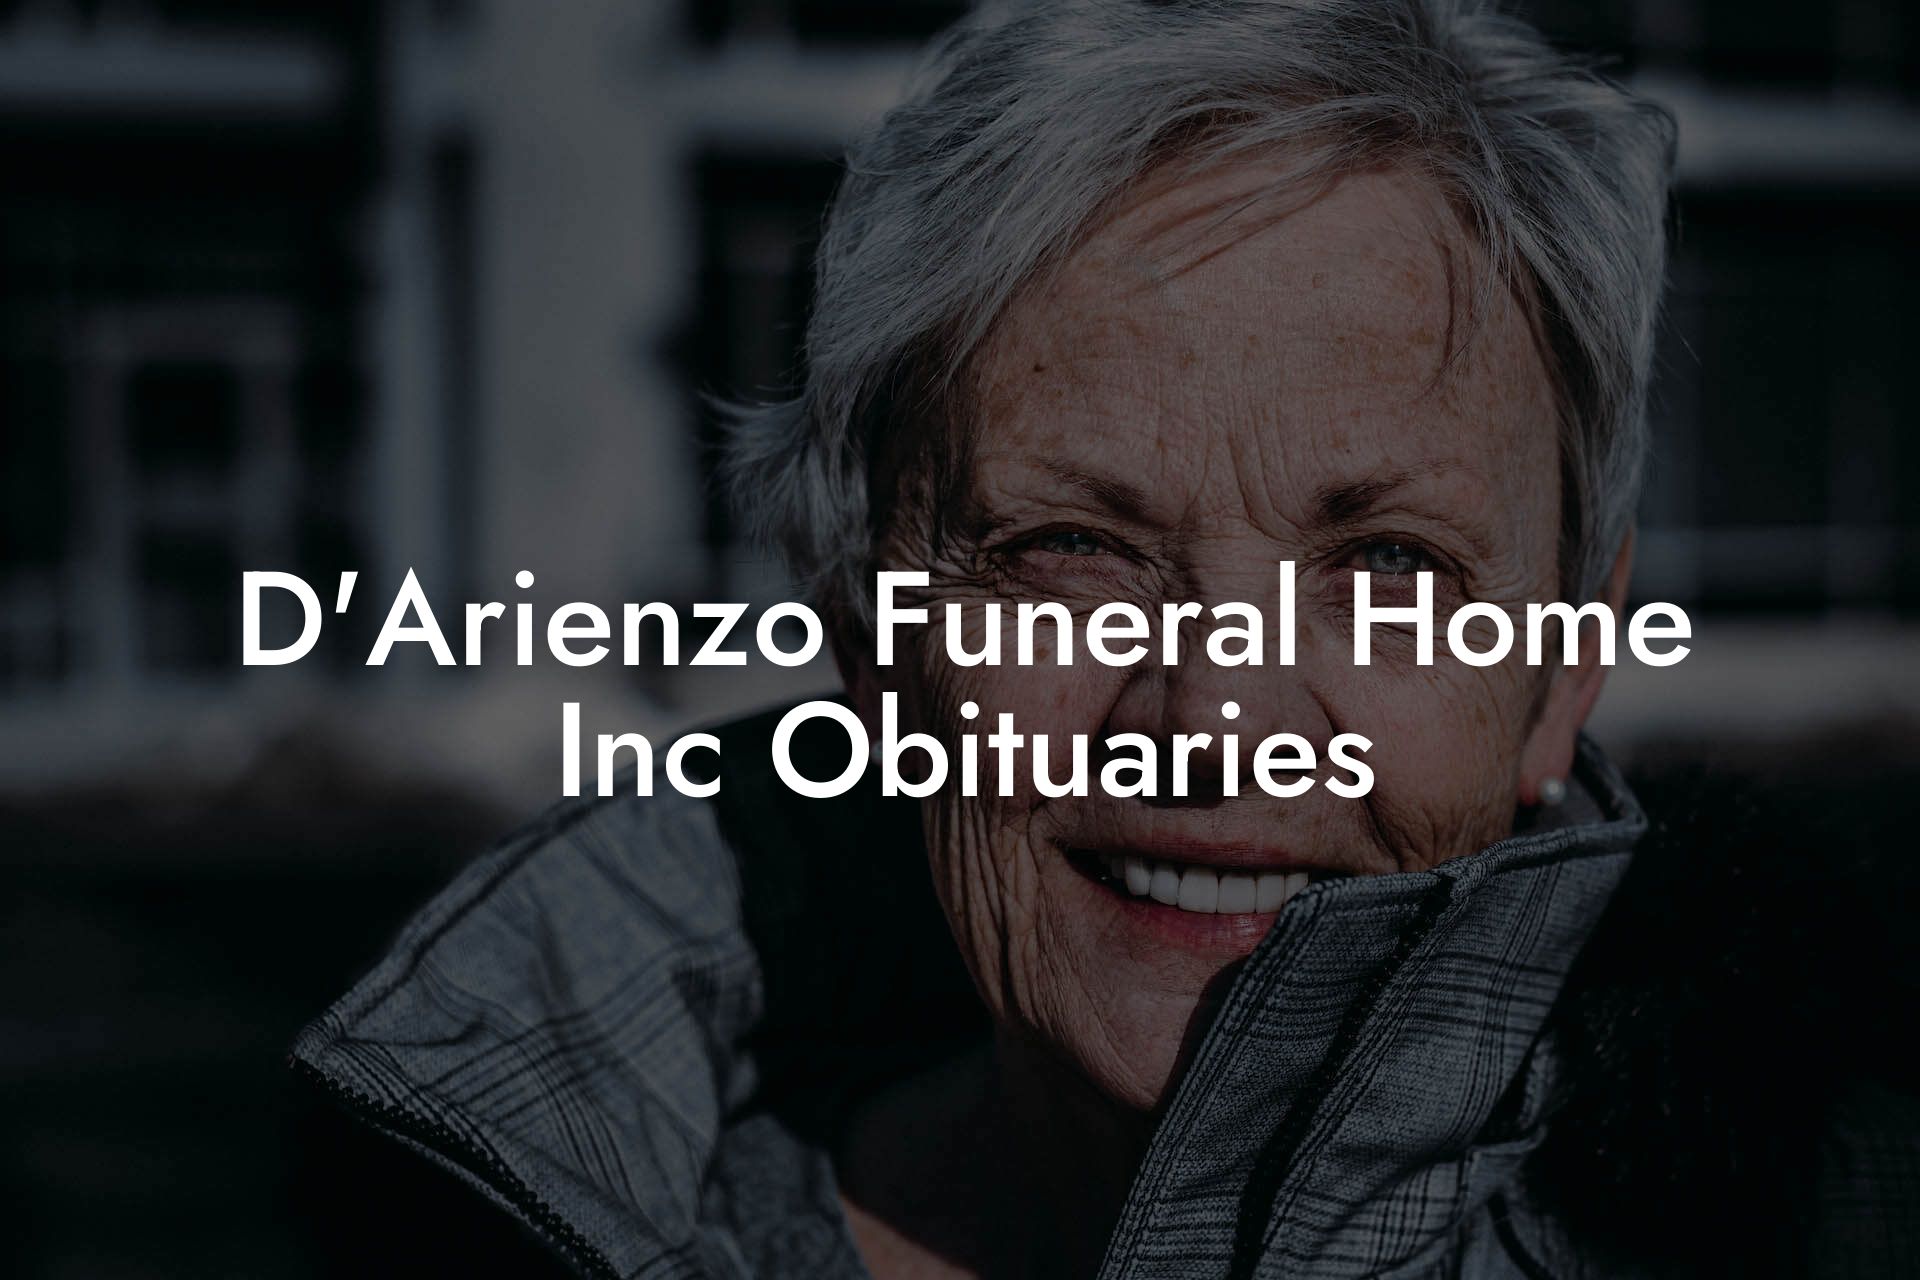 D'Arienzo Funeral Home Inc Obituaries